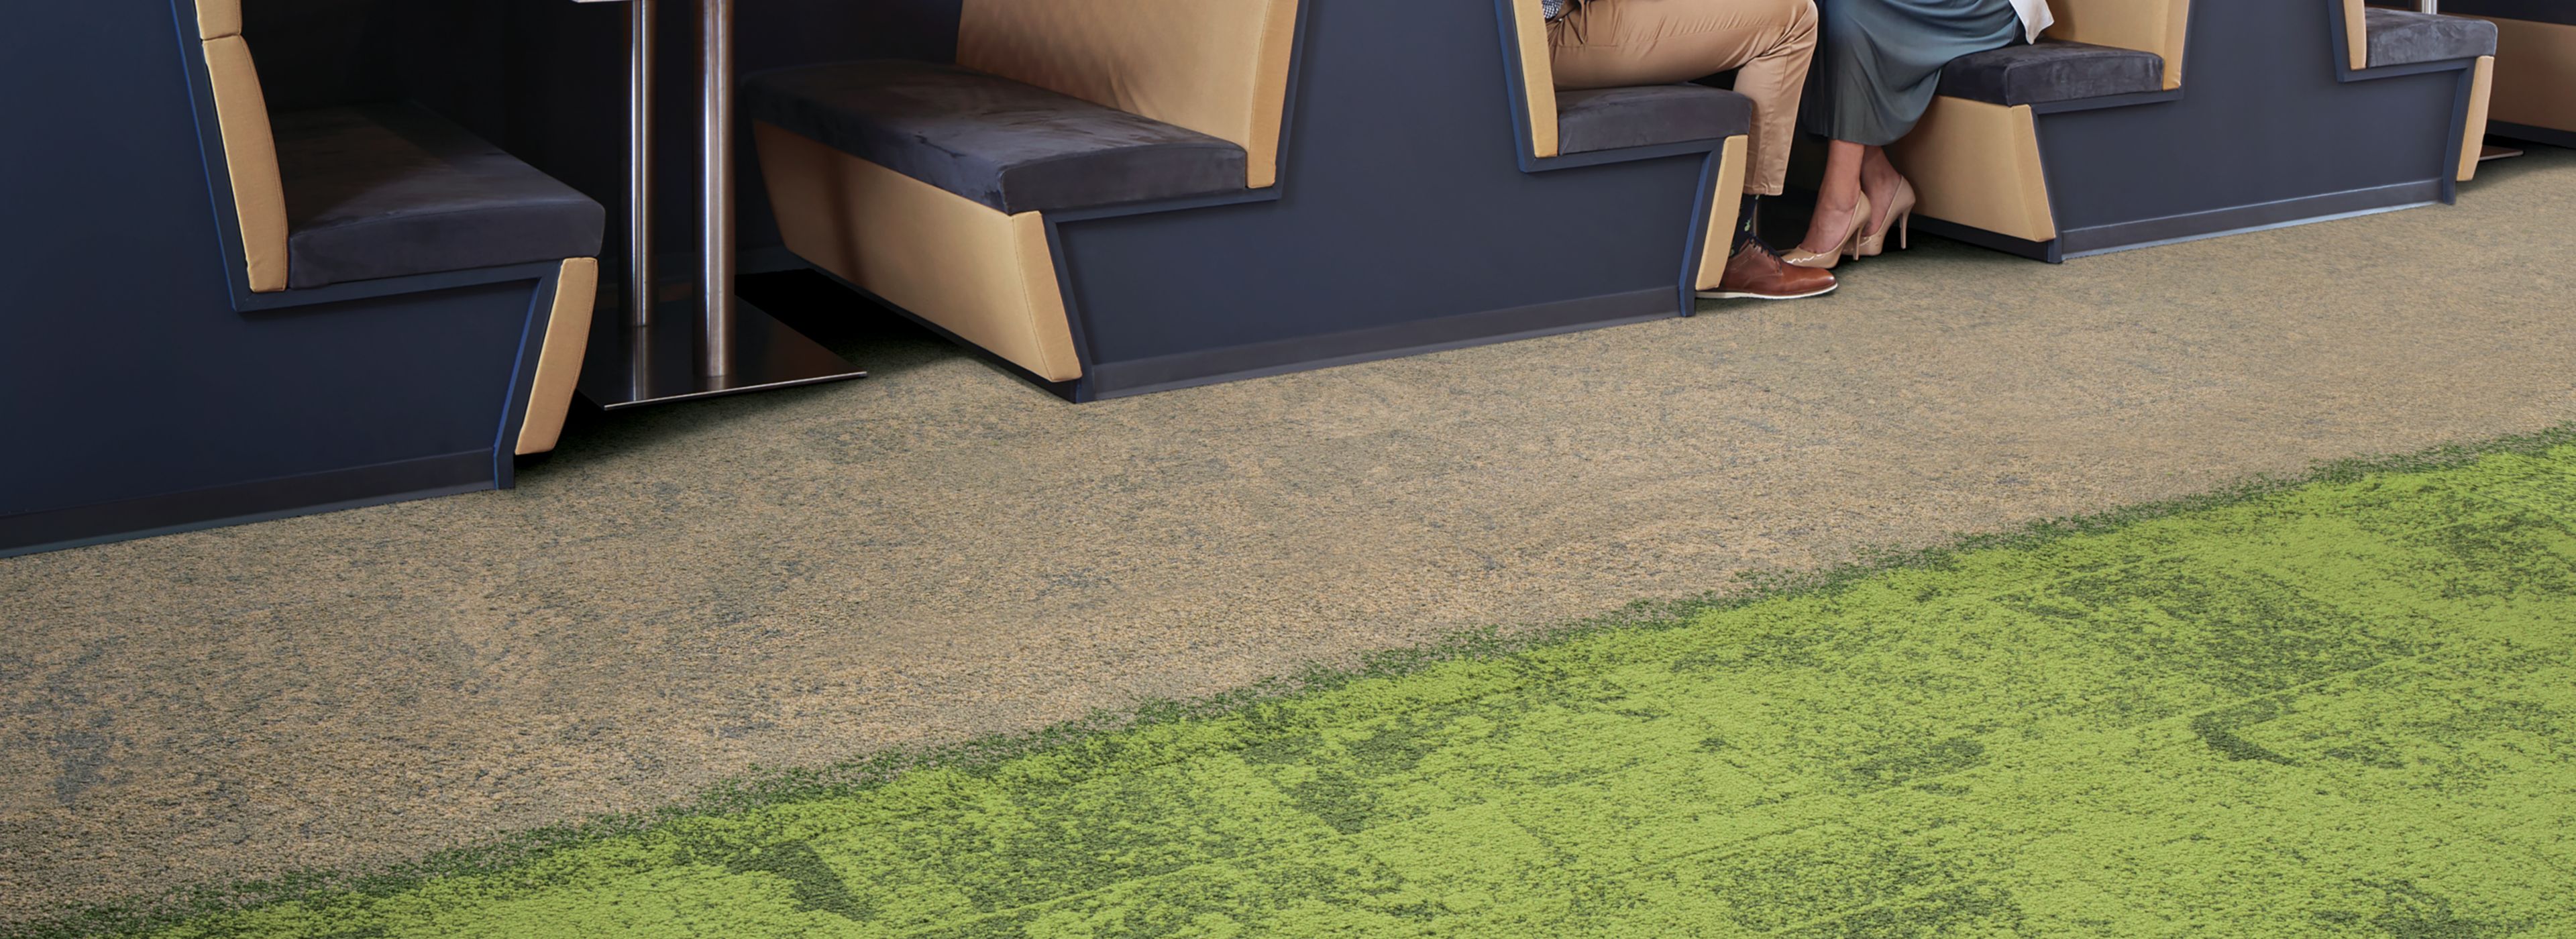 Interface UR101, UR102 and UR103 carpet tile in meeting space with booths número de imagen 1